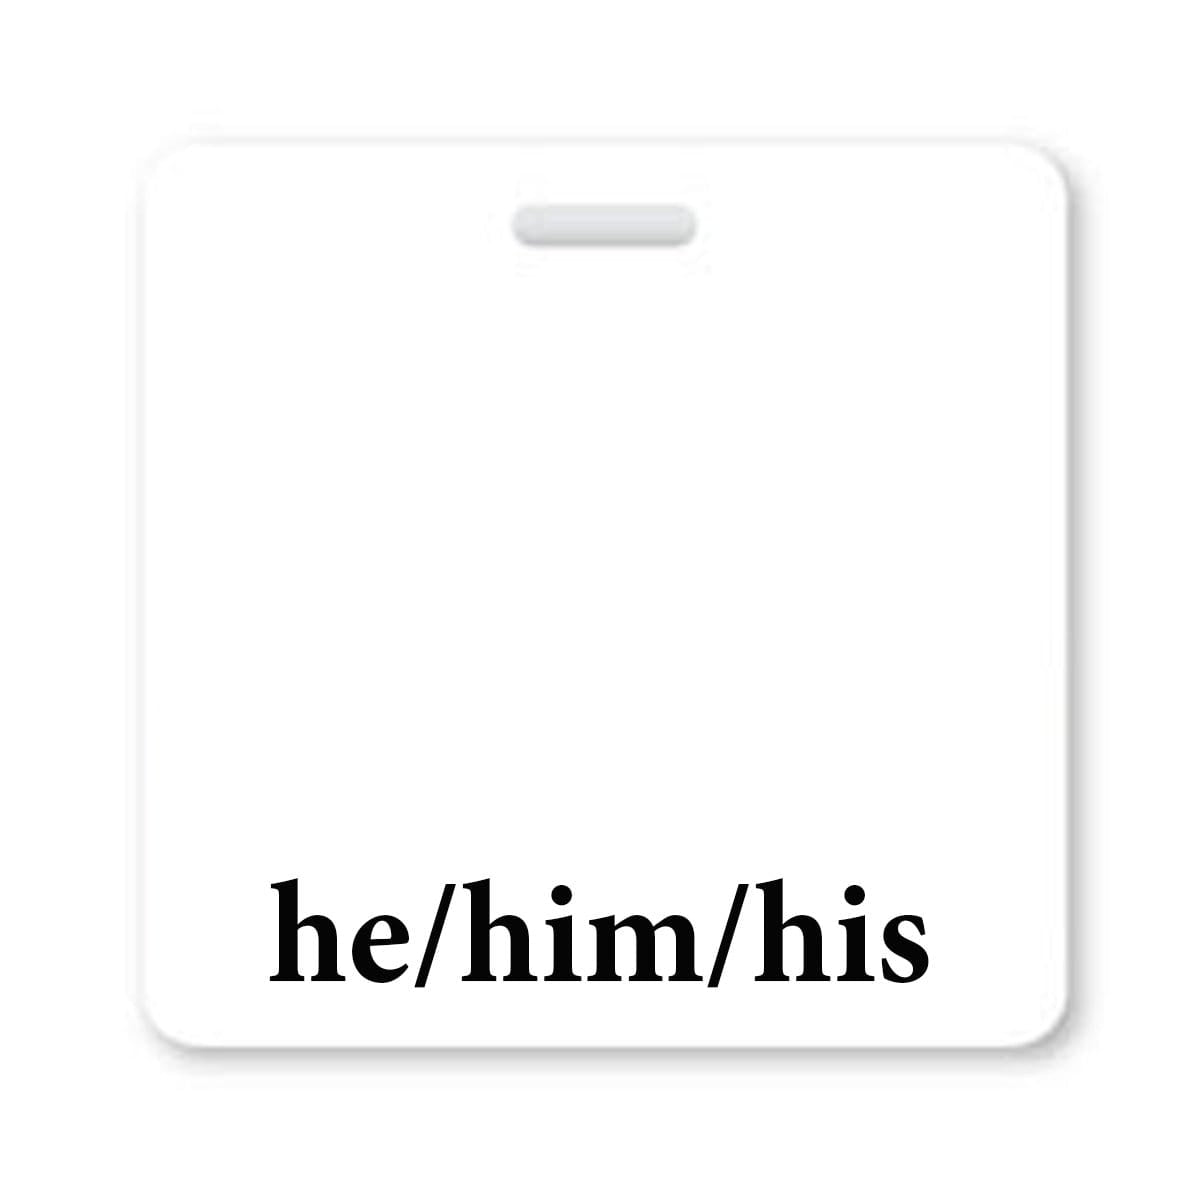 He/Him/His Pronouns Badge Buddy Horizontal with White Border